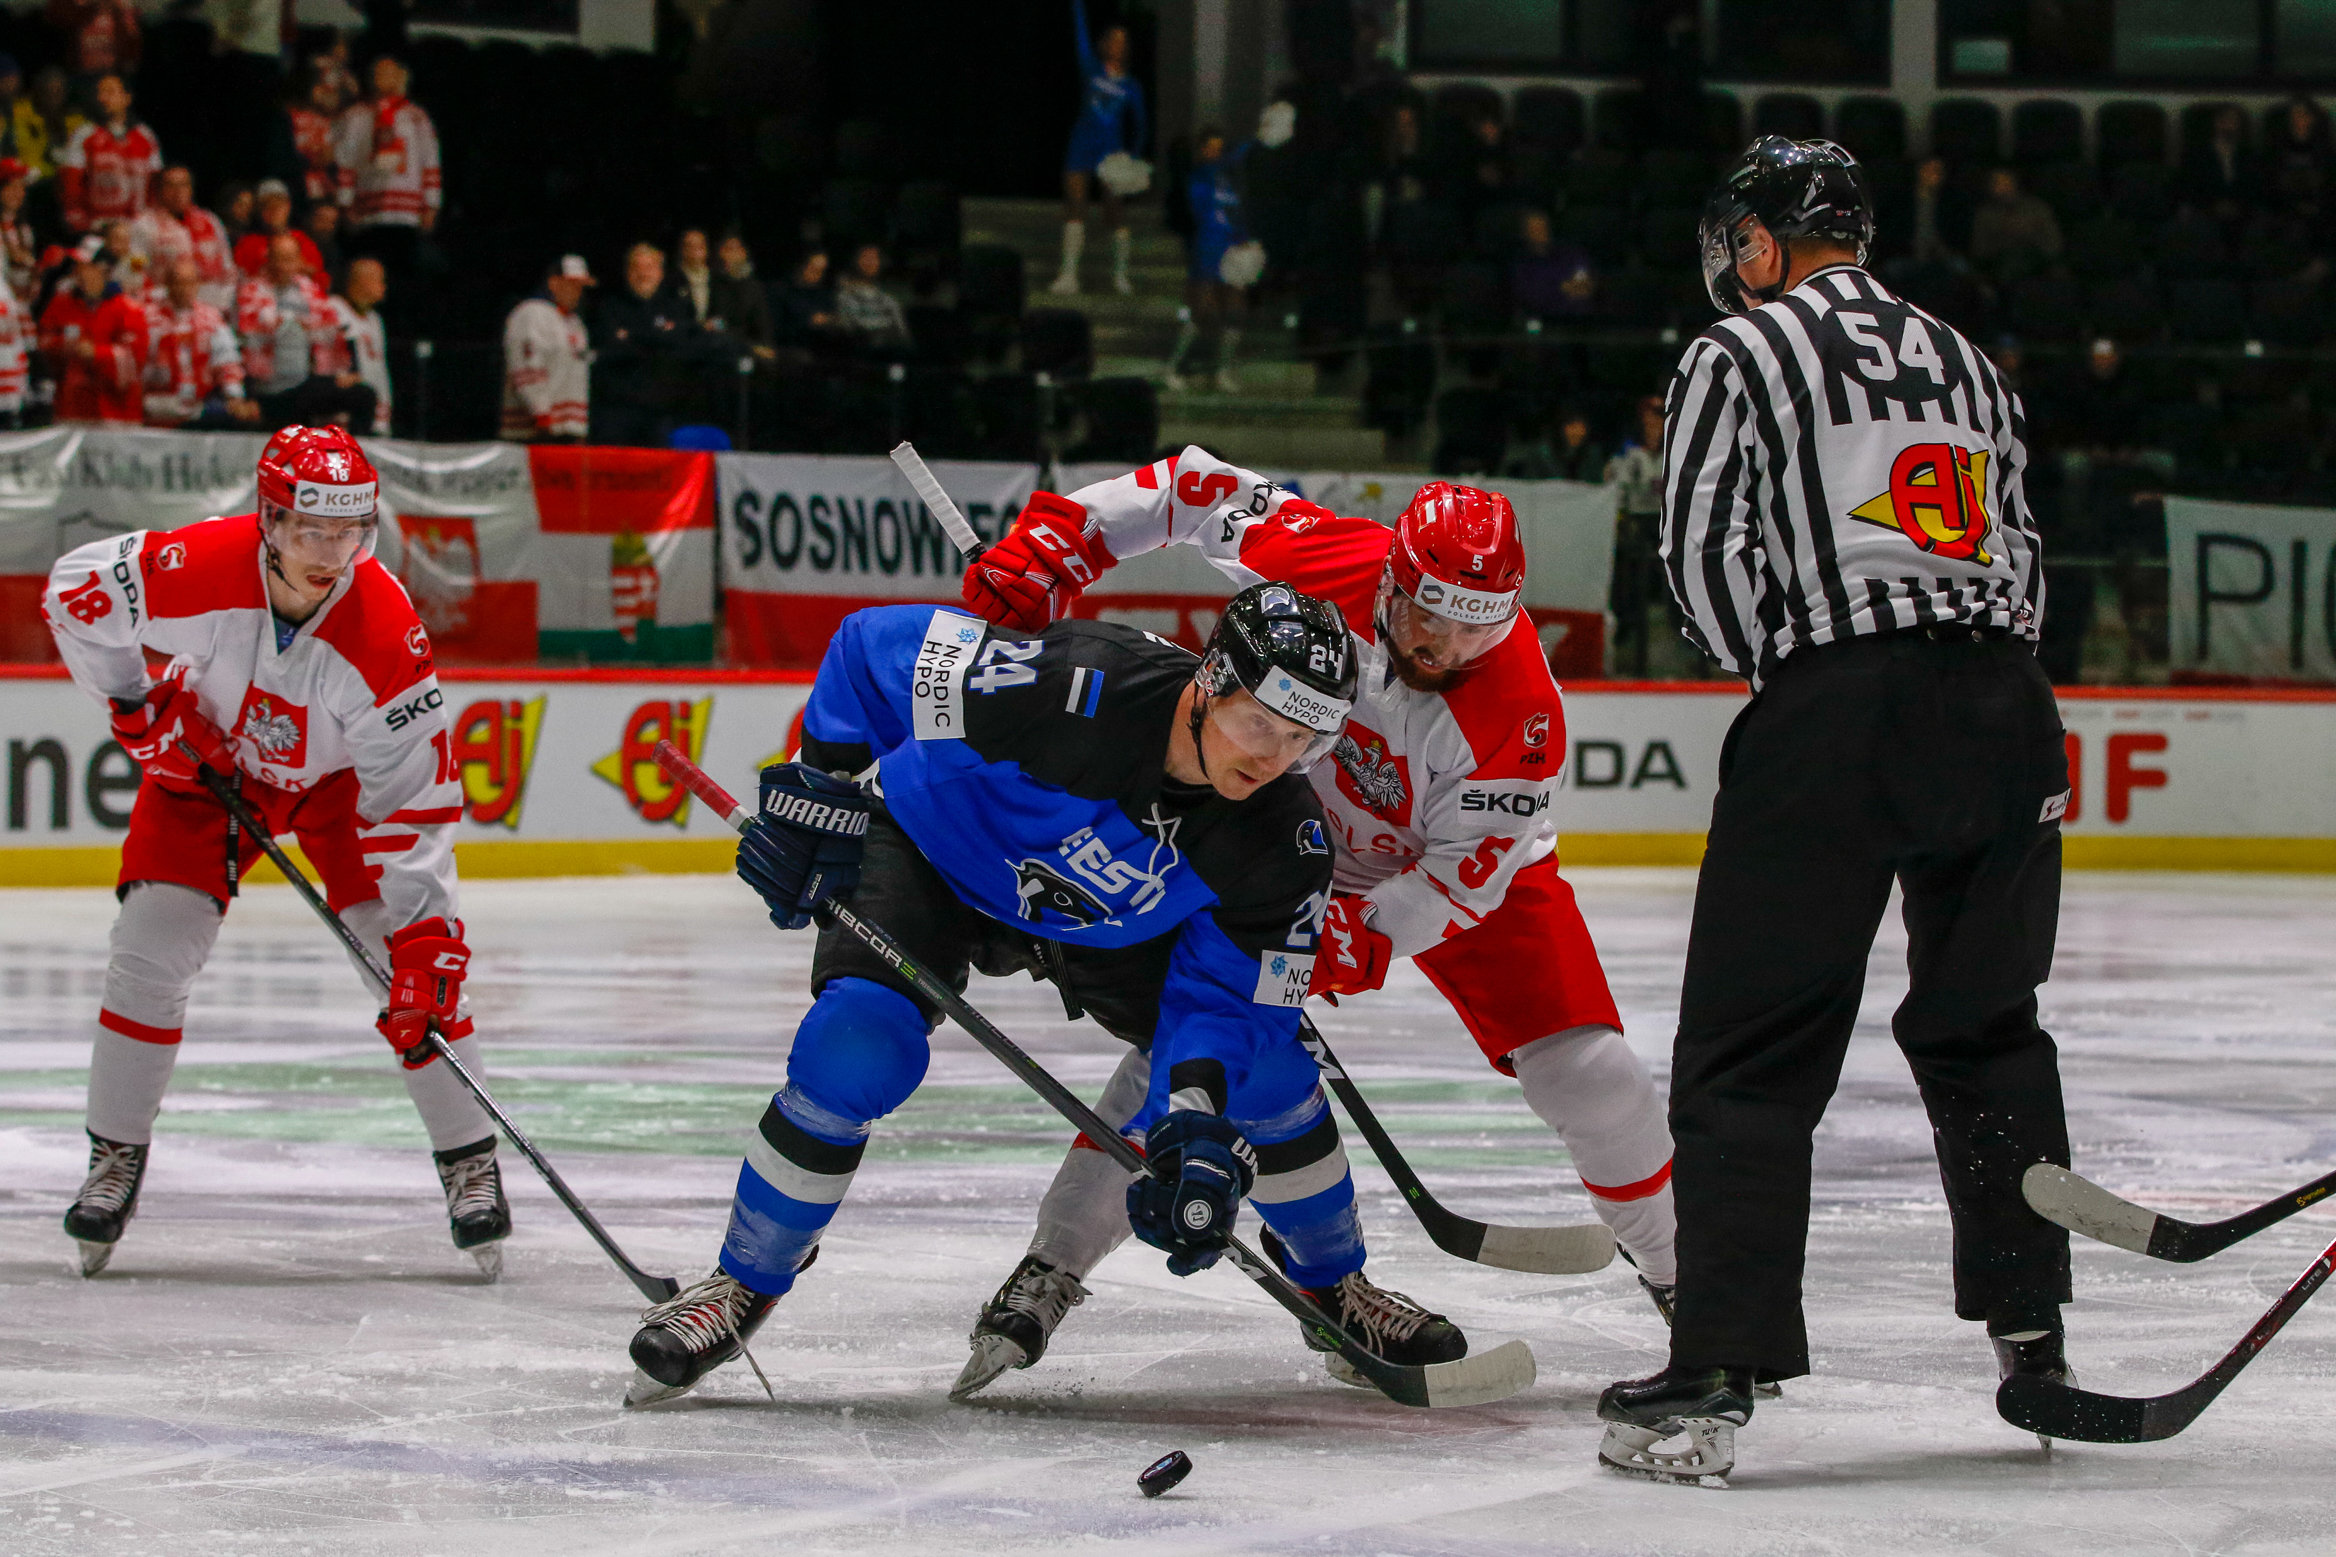 IIHF - Gallery: Estonia vs. Poland - 2019 IIHF Ice Hockey World ...